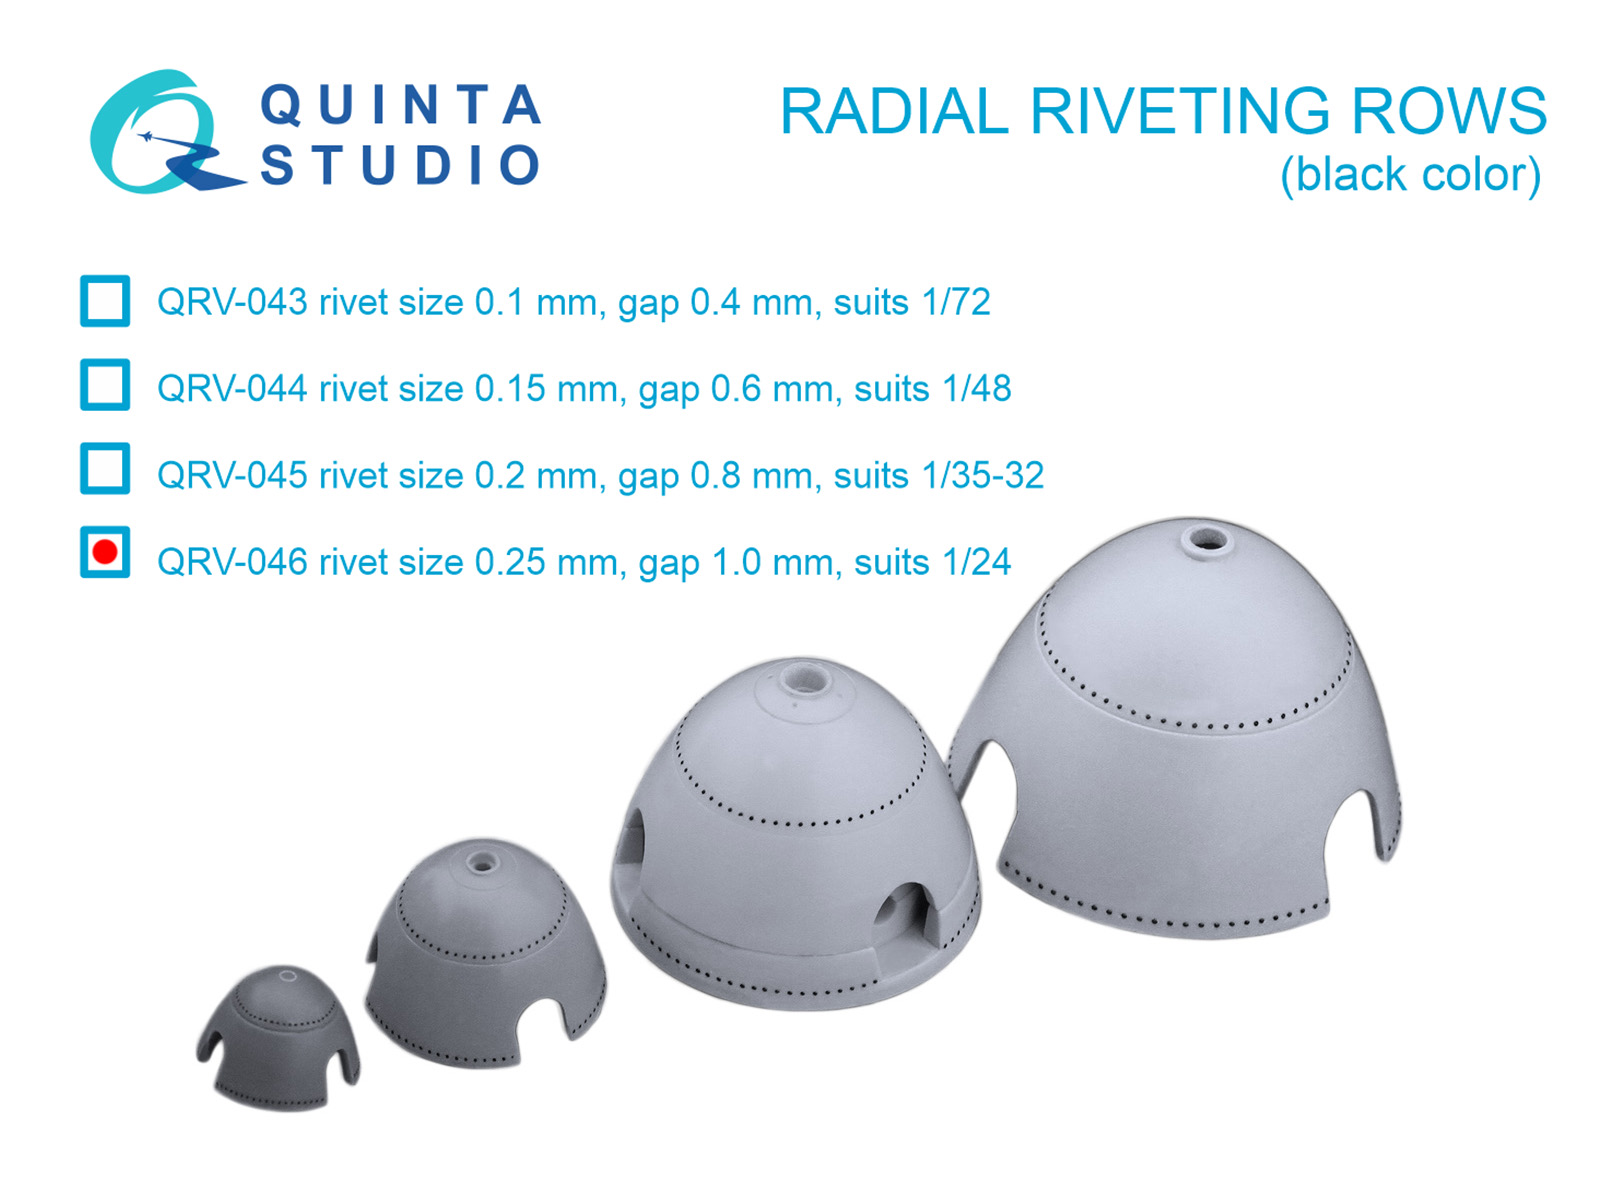 Radial riveting rows (rivet size 0.25 mm, gap 1.0 mm, suits 1/24), Black color